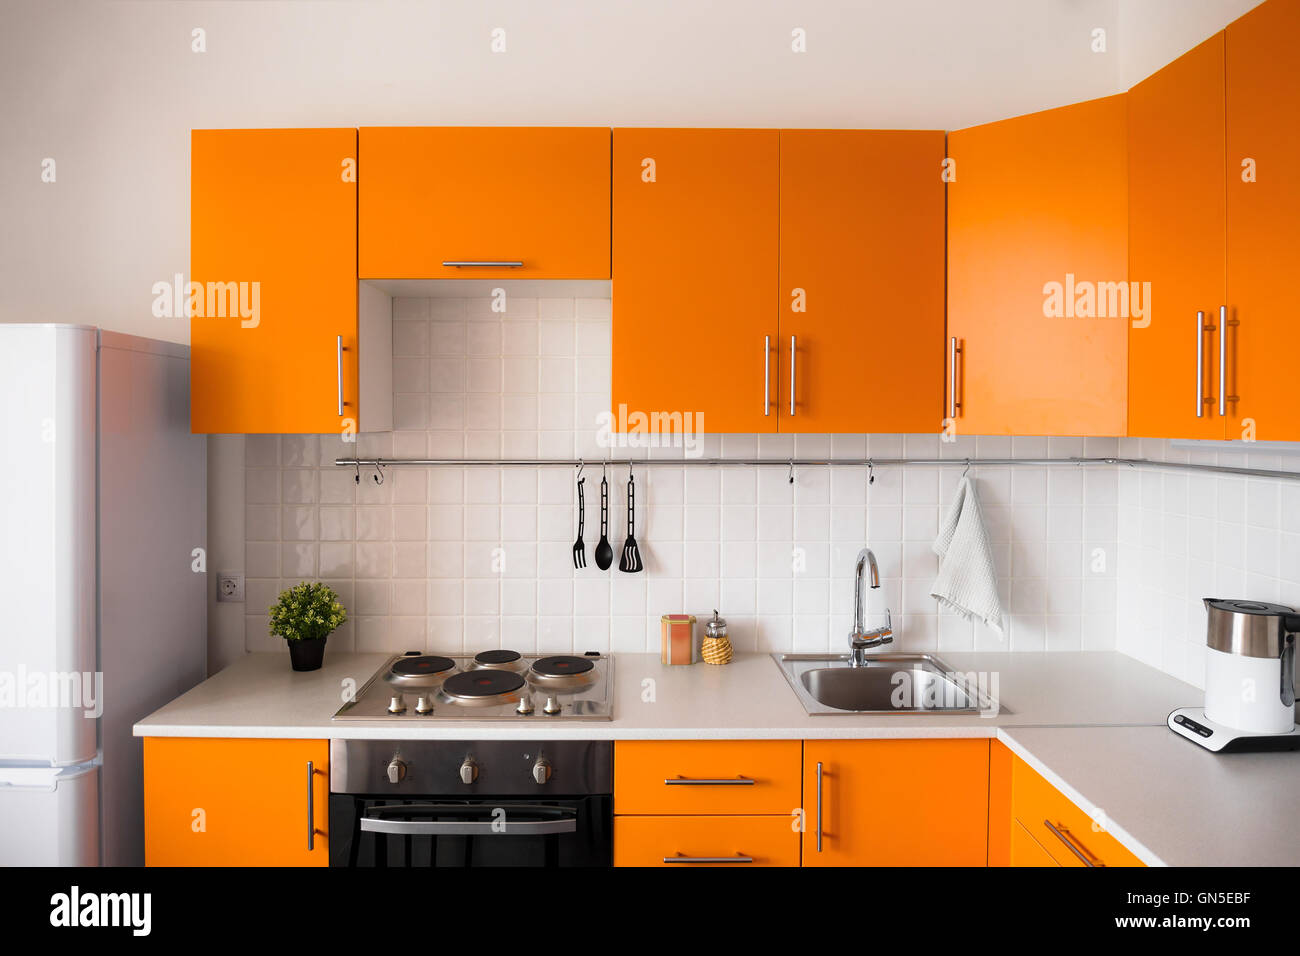 https://c8.alamy.com/comp/GN5EBF/orange-kitchen-set-in-modern-style-GN5EBF.jpg